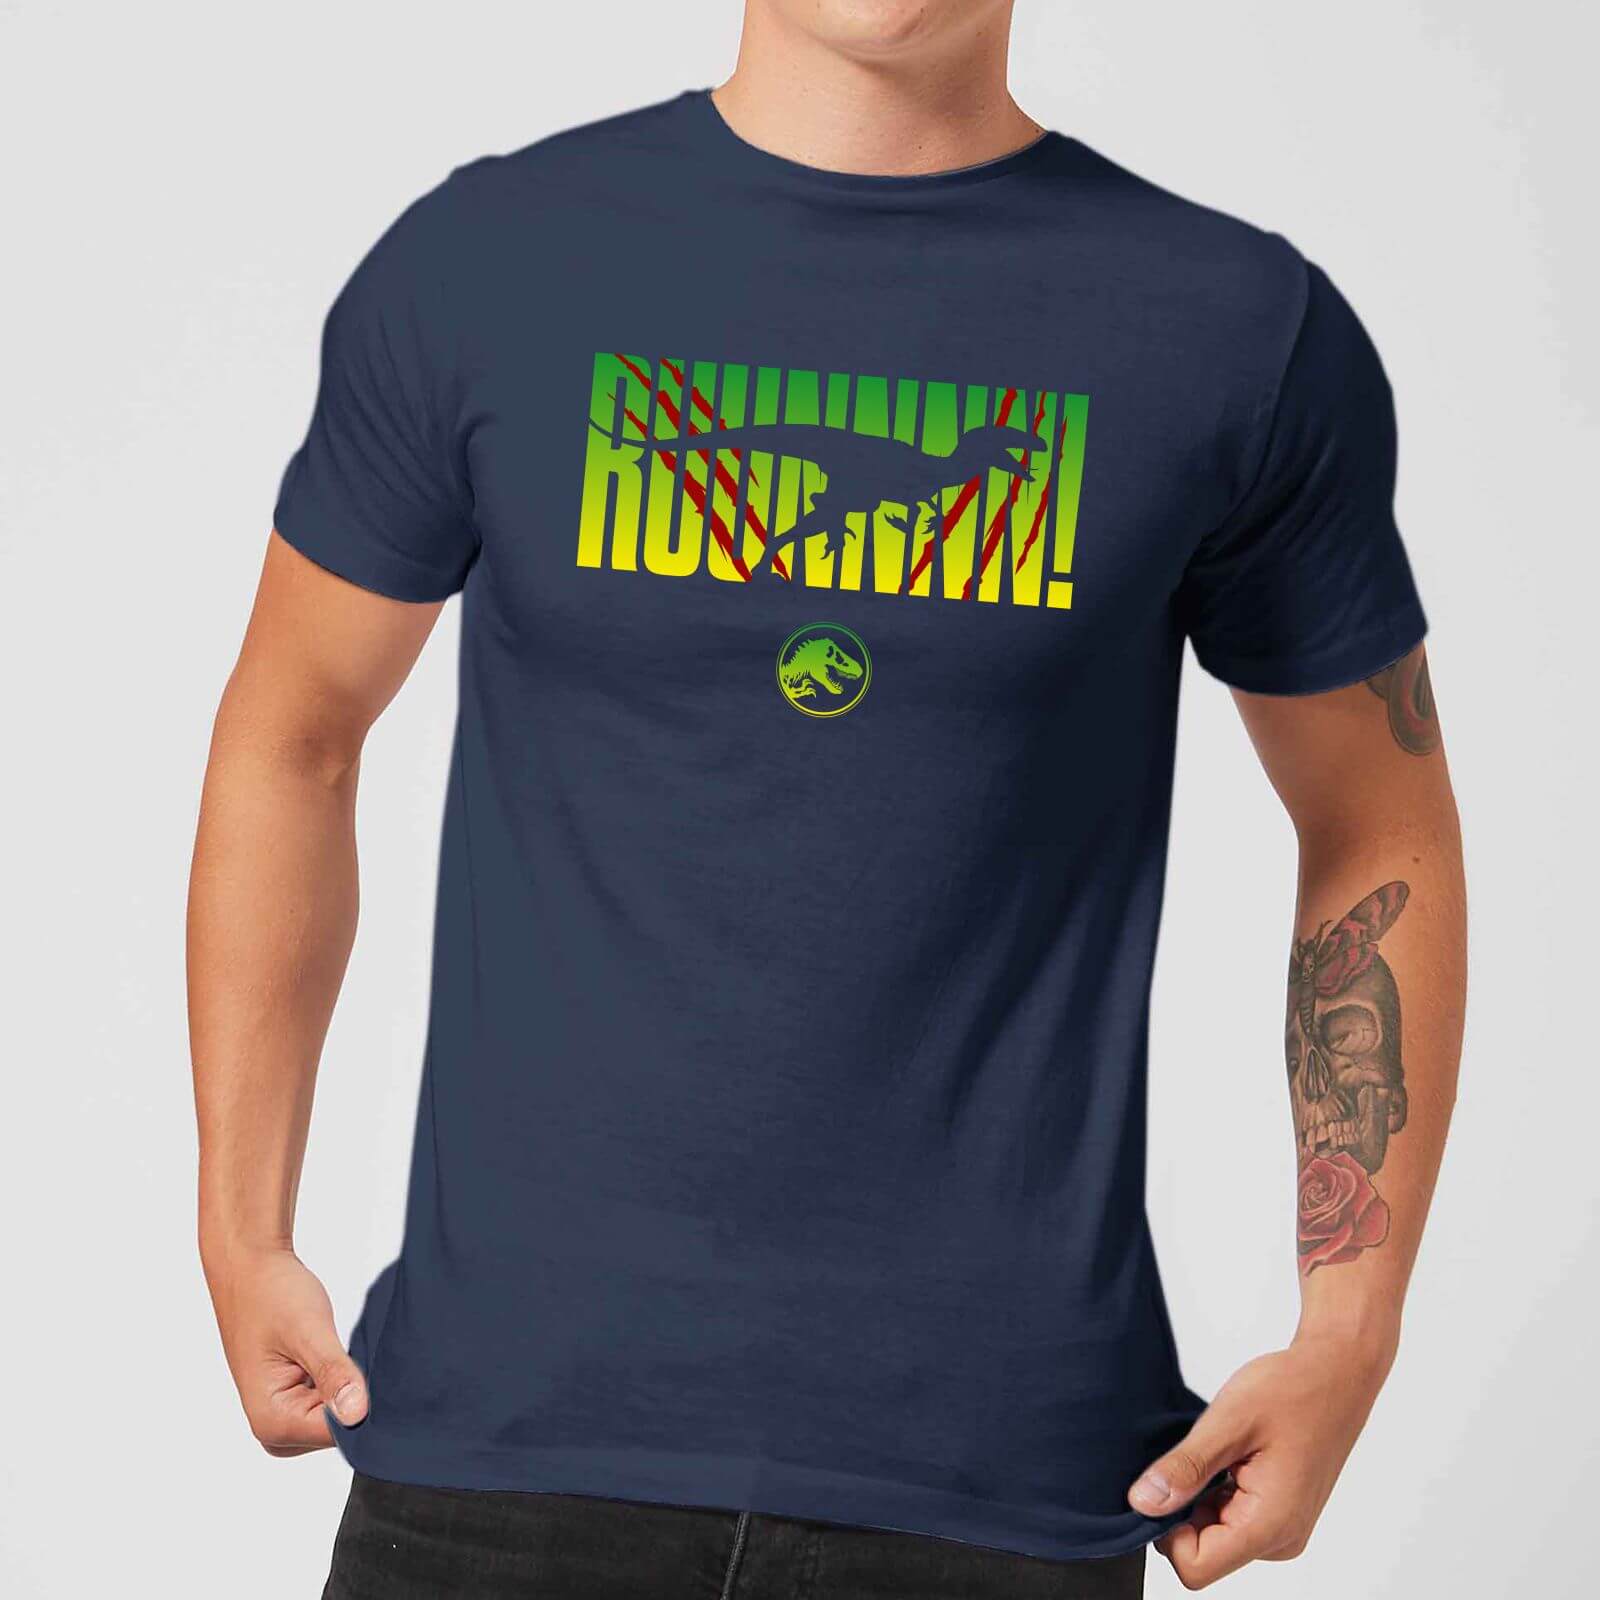 Jurassic Park Run! Men's T-Shirt - Navy - S - Navy